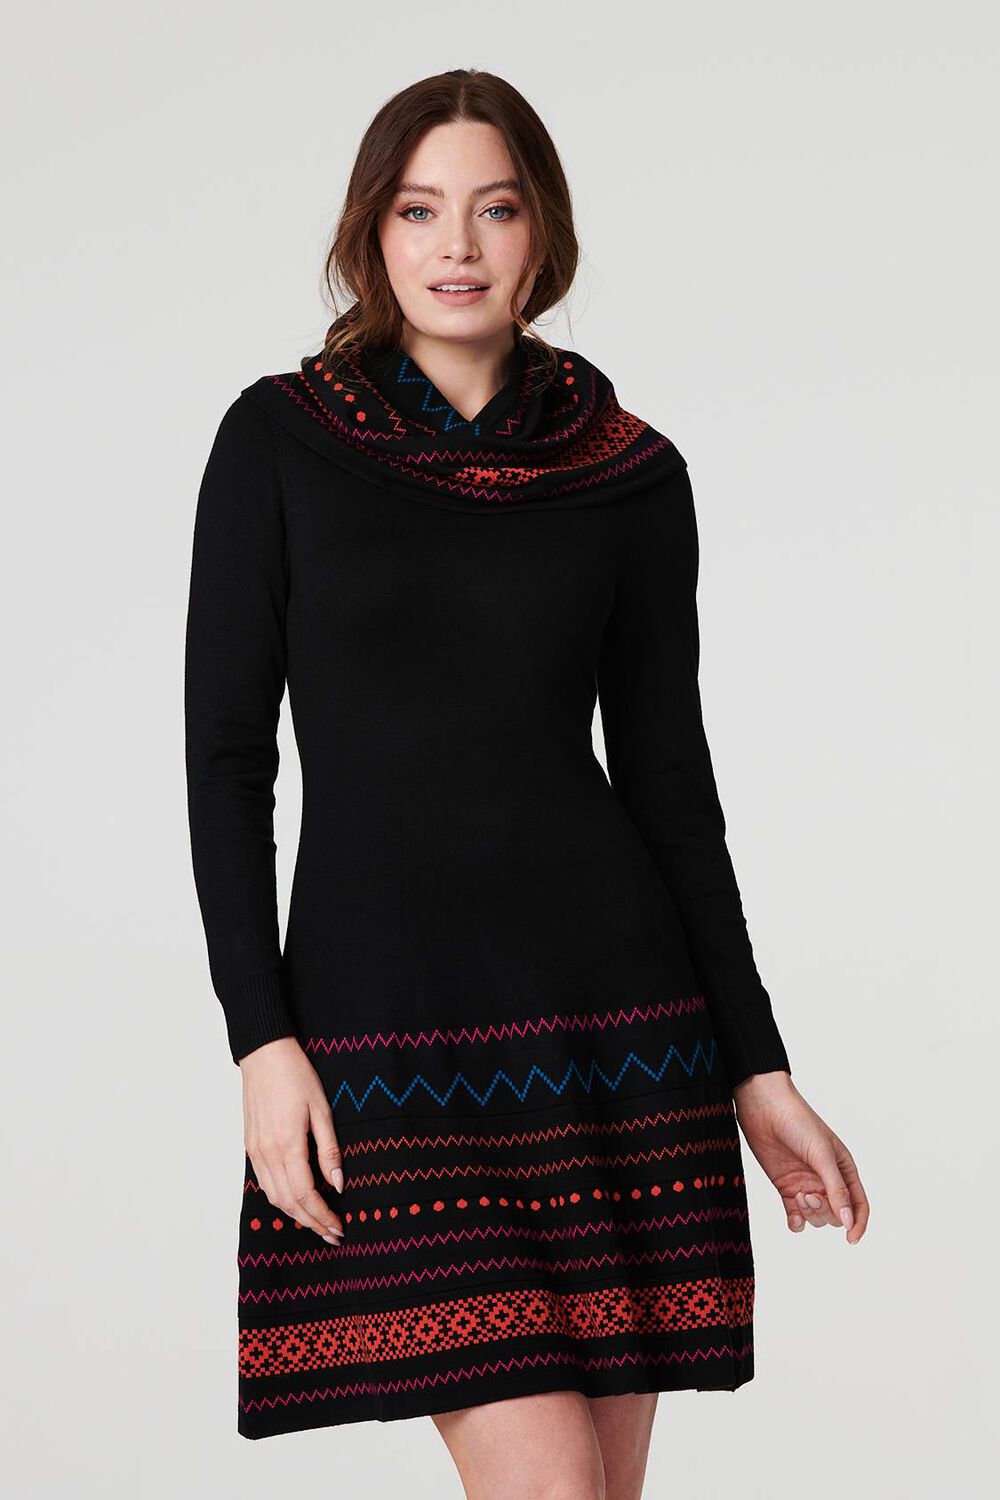 Izabel London Black - Printed Knit Skater Dress With Scarf, Size: 10